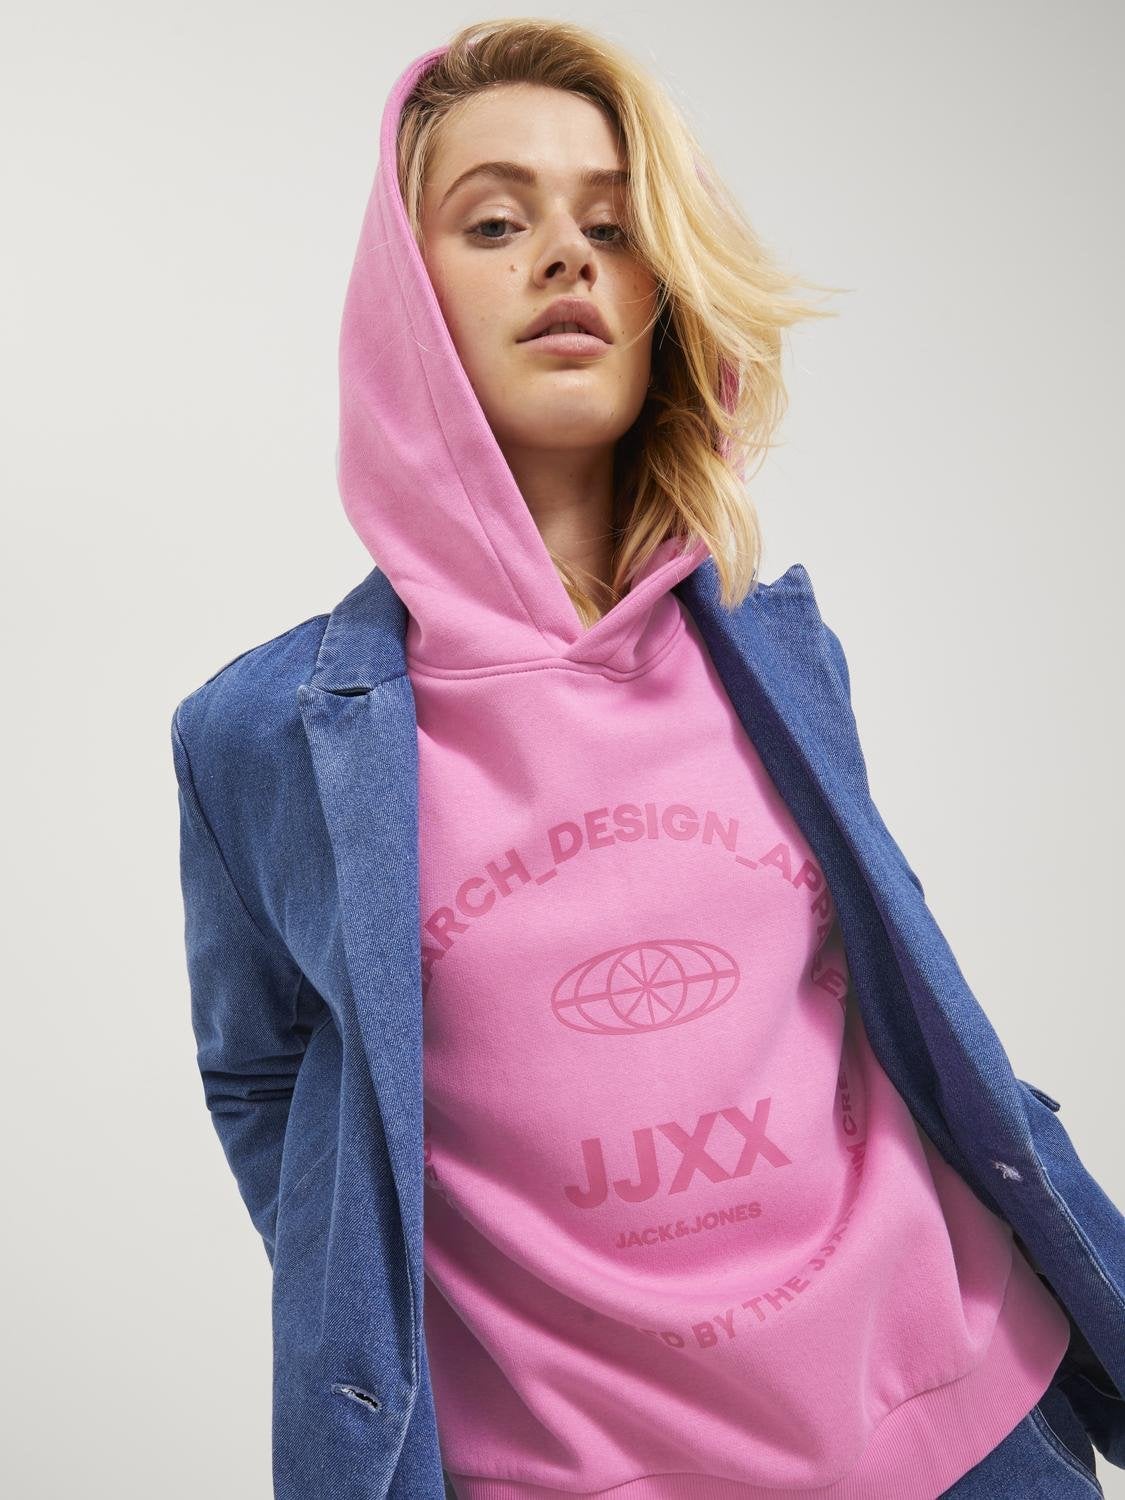 JJXX Sweatshirts for Women | JJXX Official